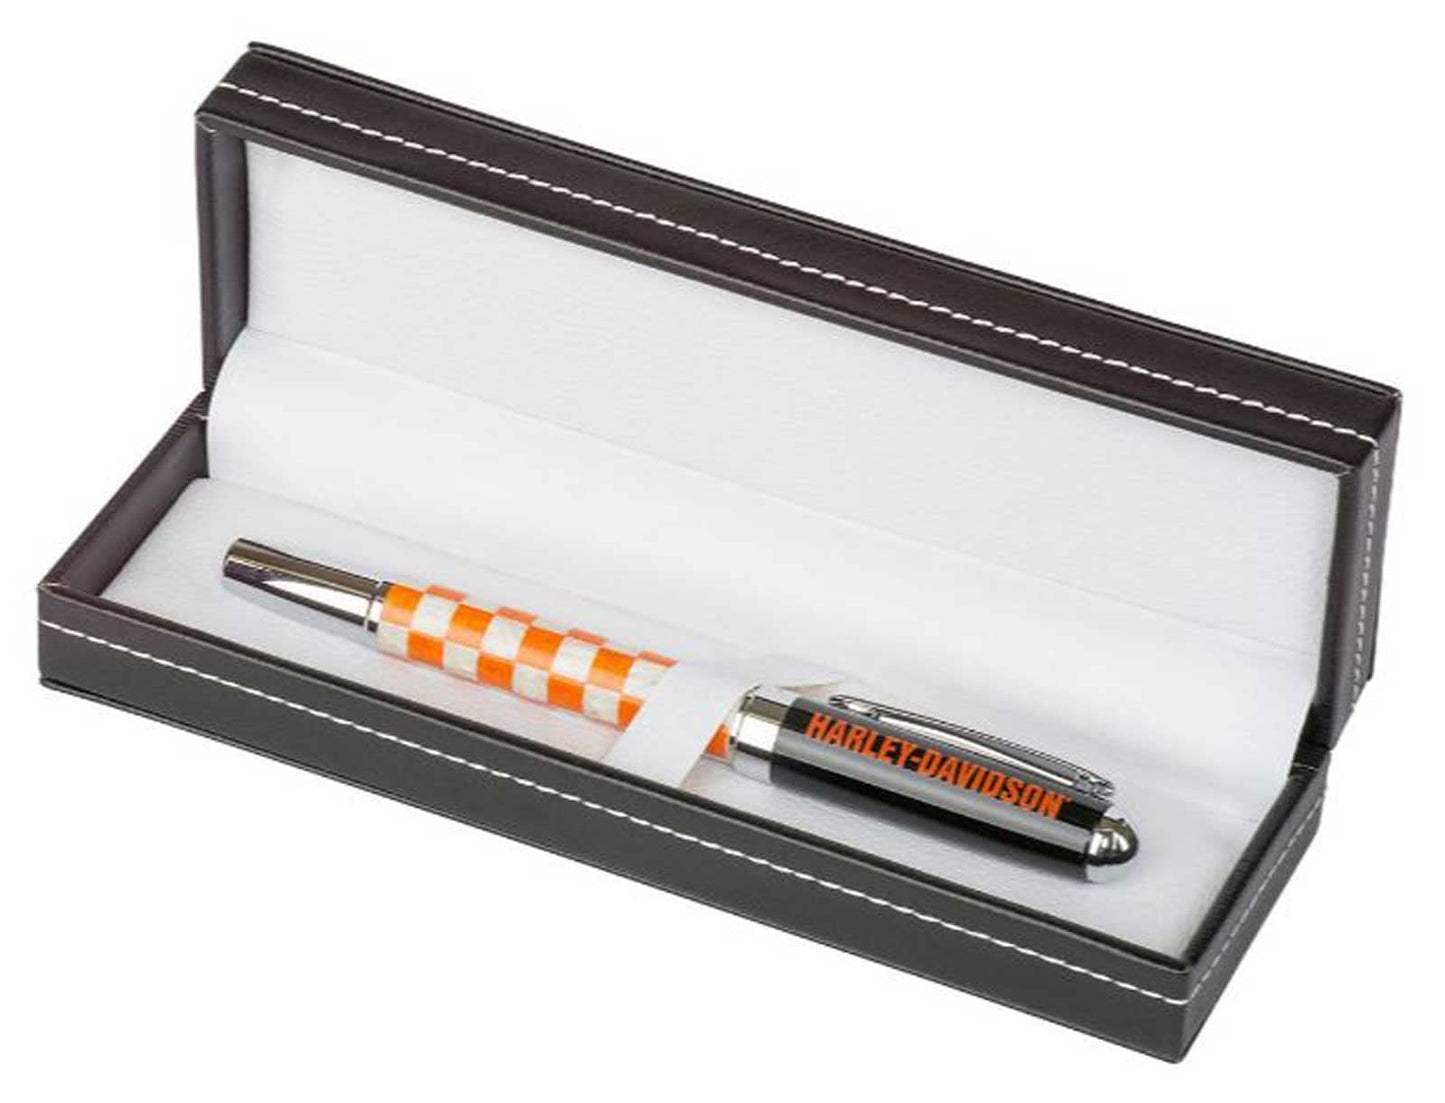 Open-box Harley-Davidson Checkered Orange Pen